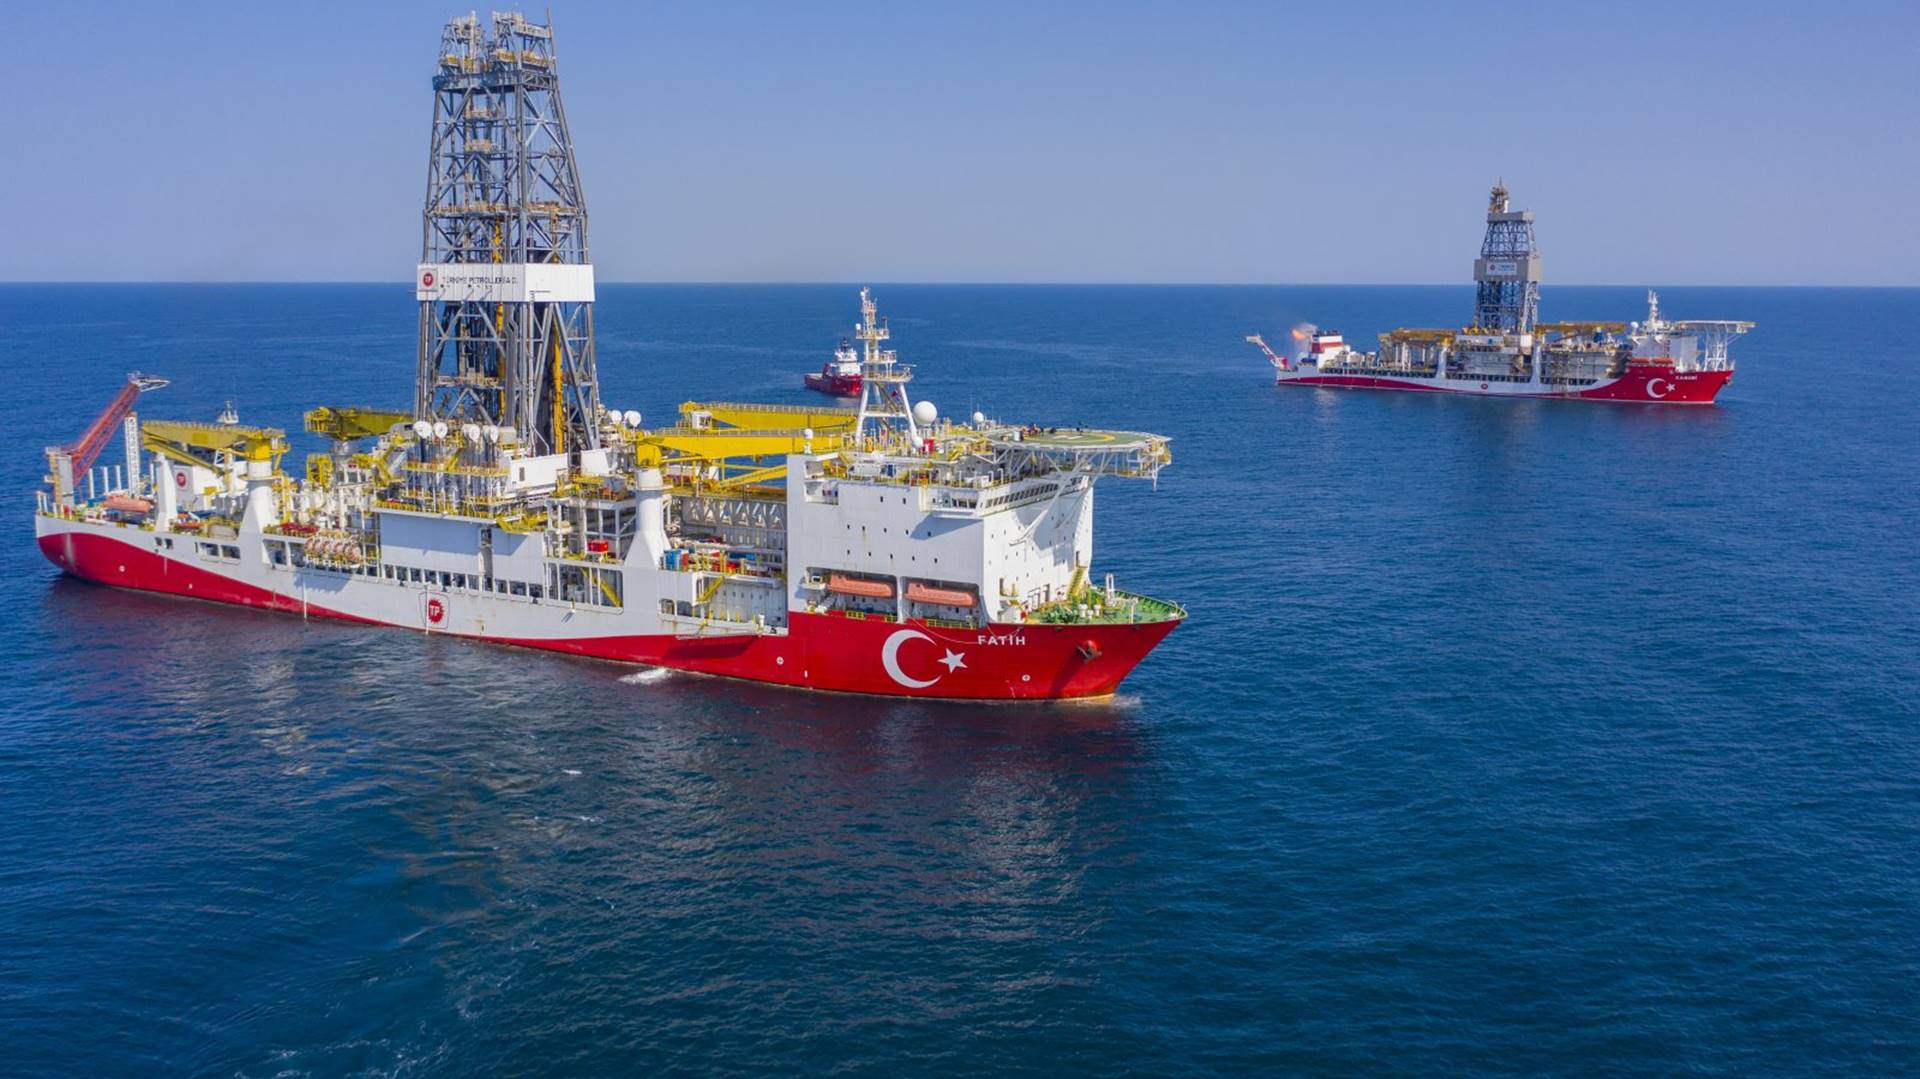 Turkey’s Fatih starts drilling activities at new Black Sea well